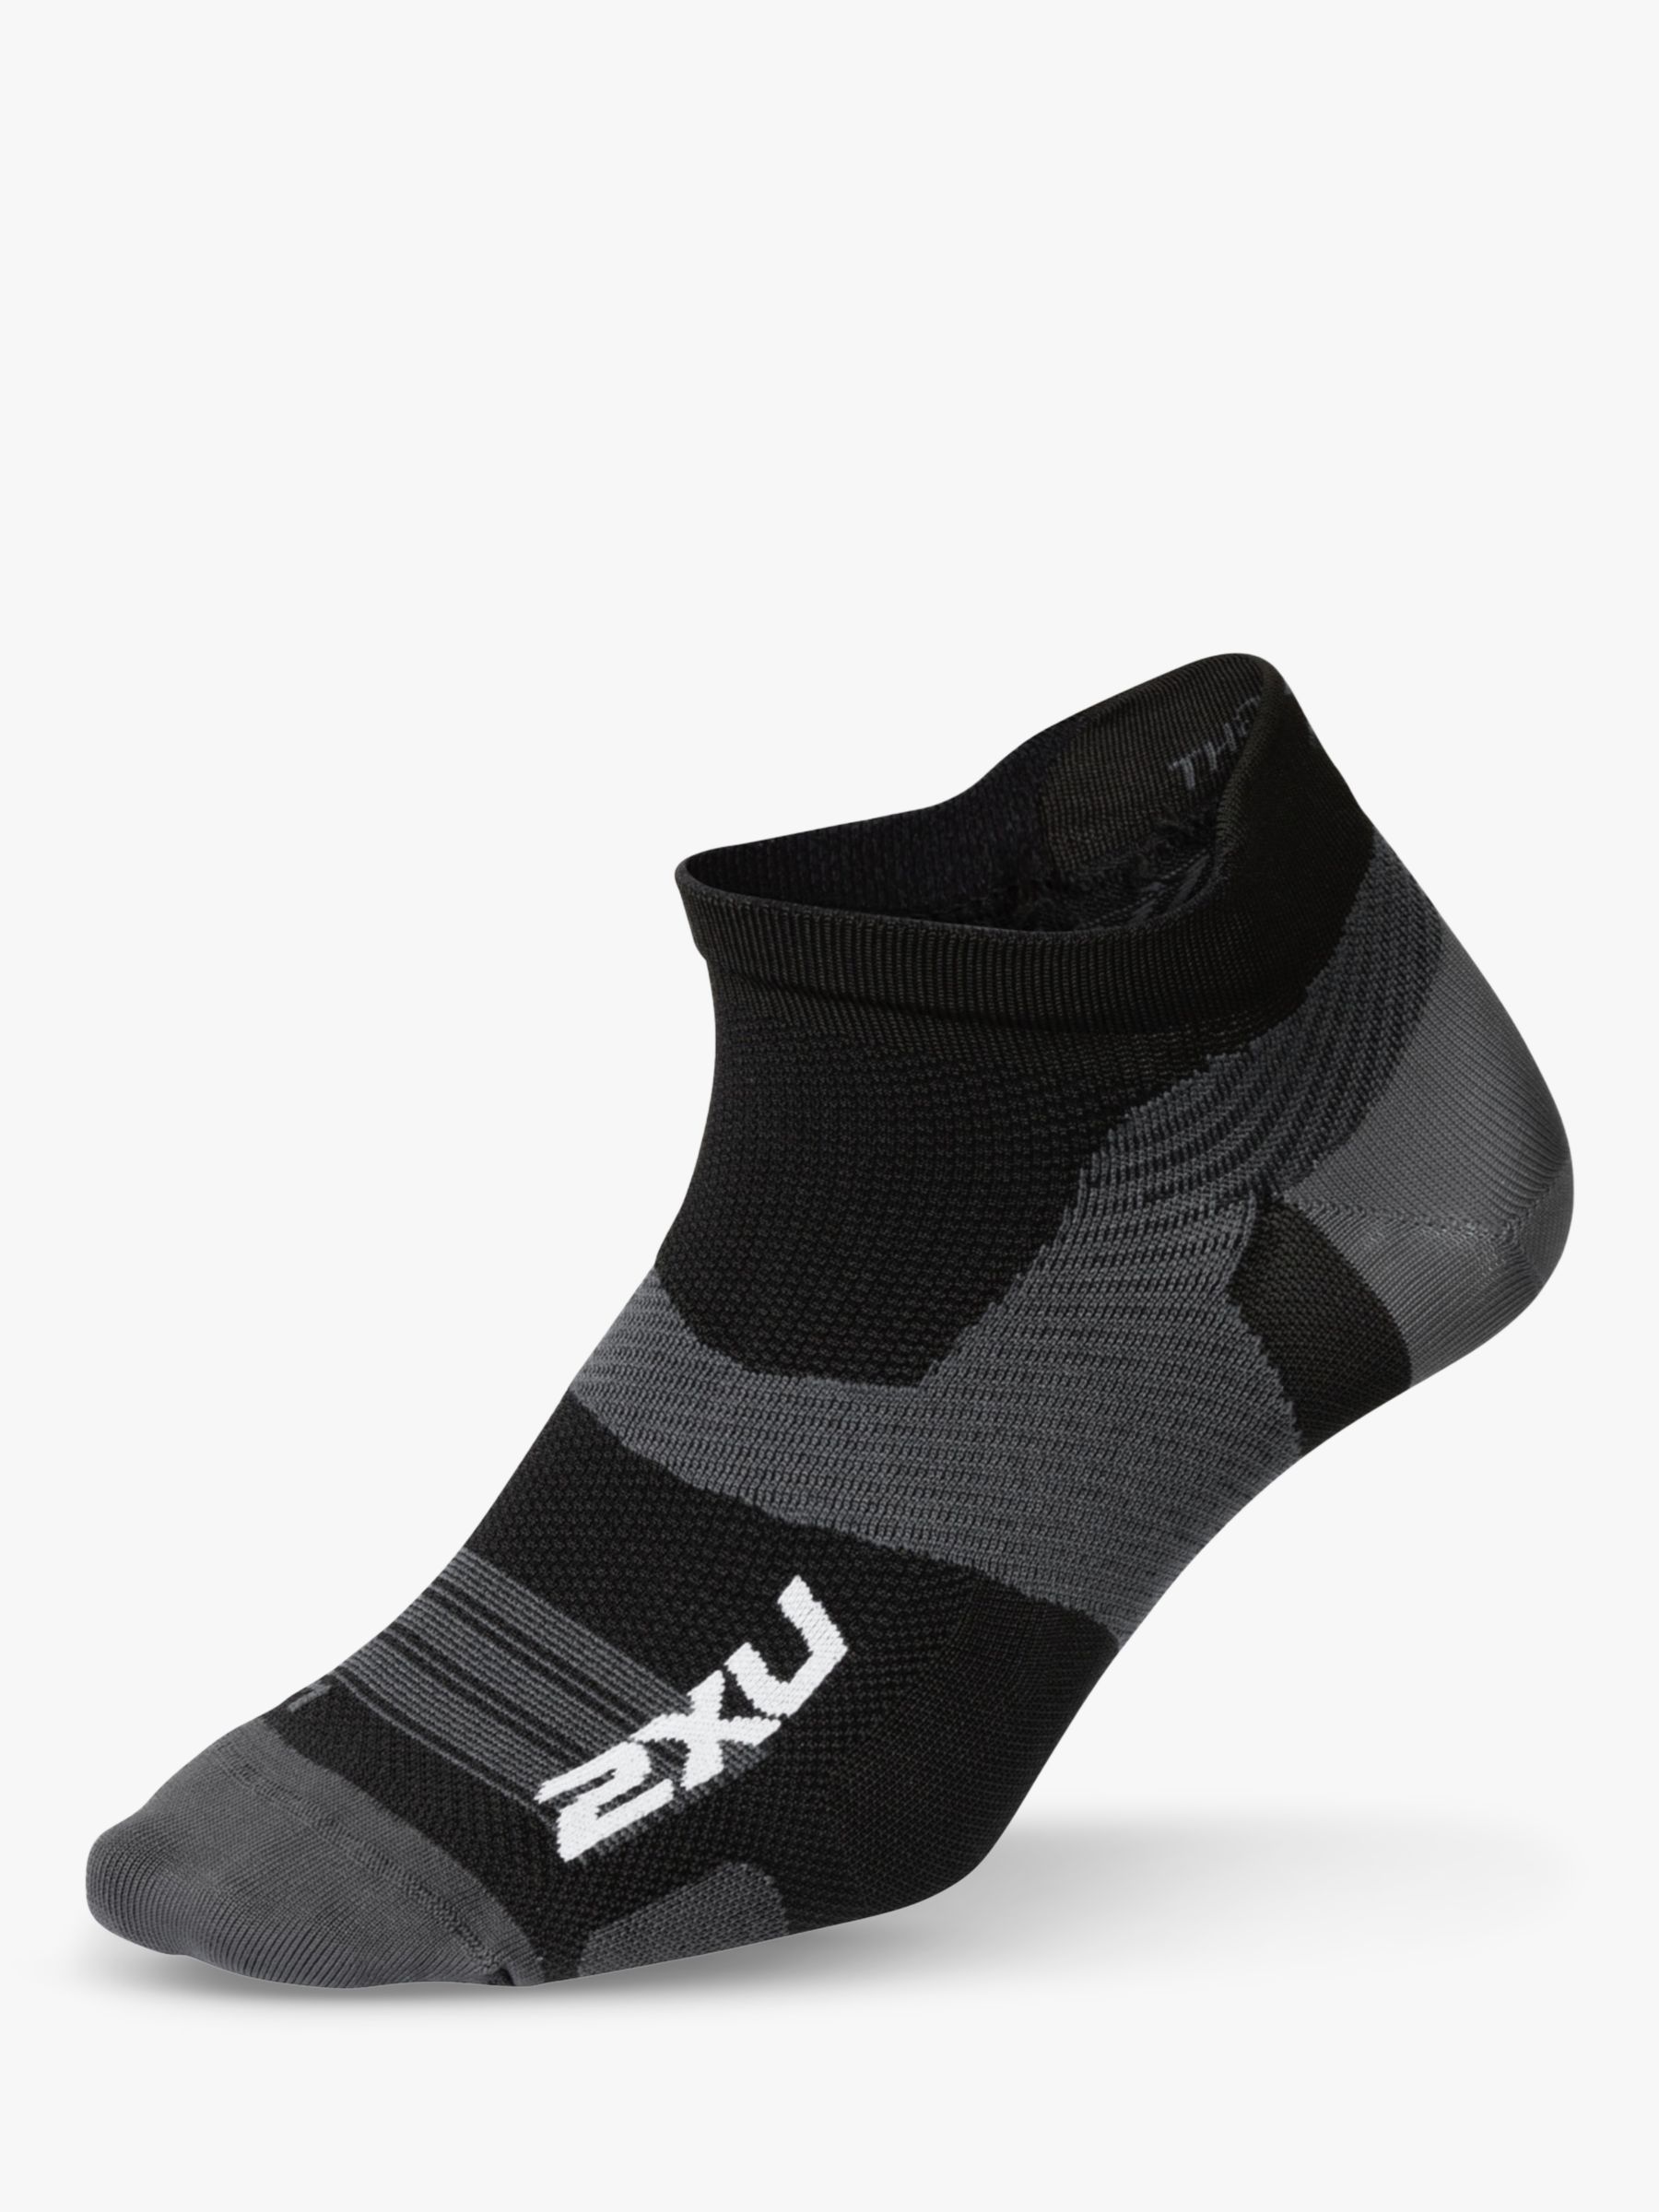 2XU Vectr Compression Socks, Black, L